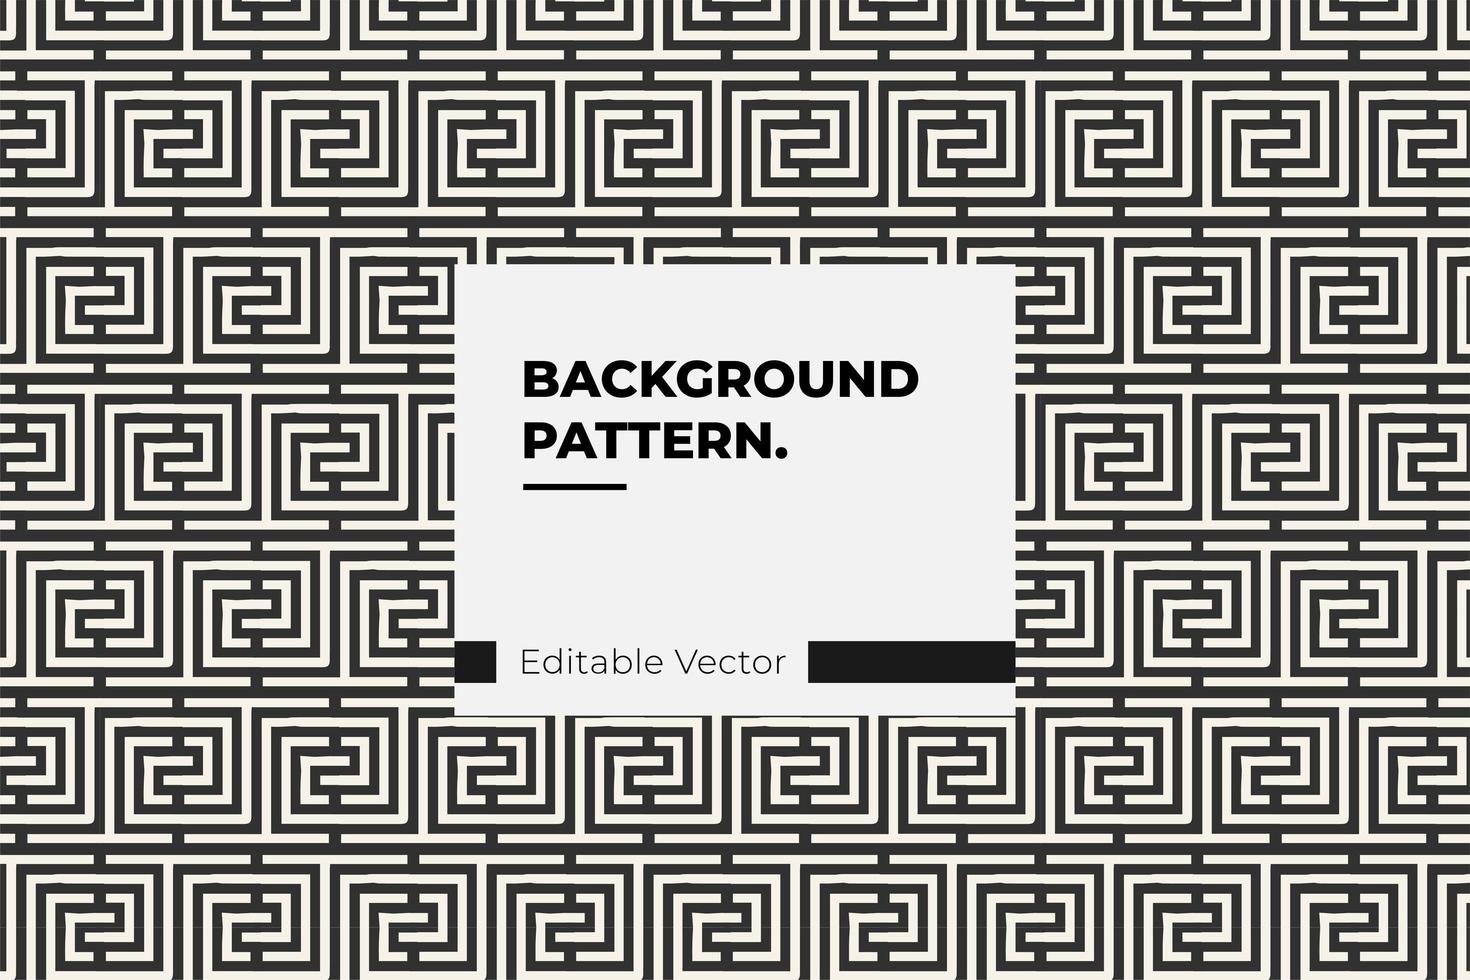 Interlocking Square Pattern vector